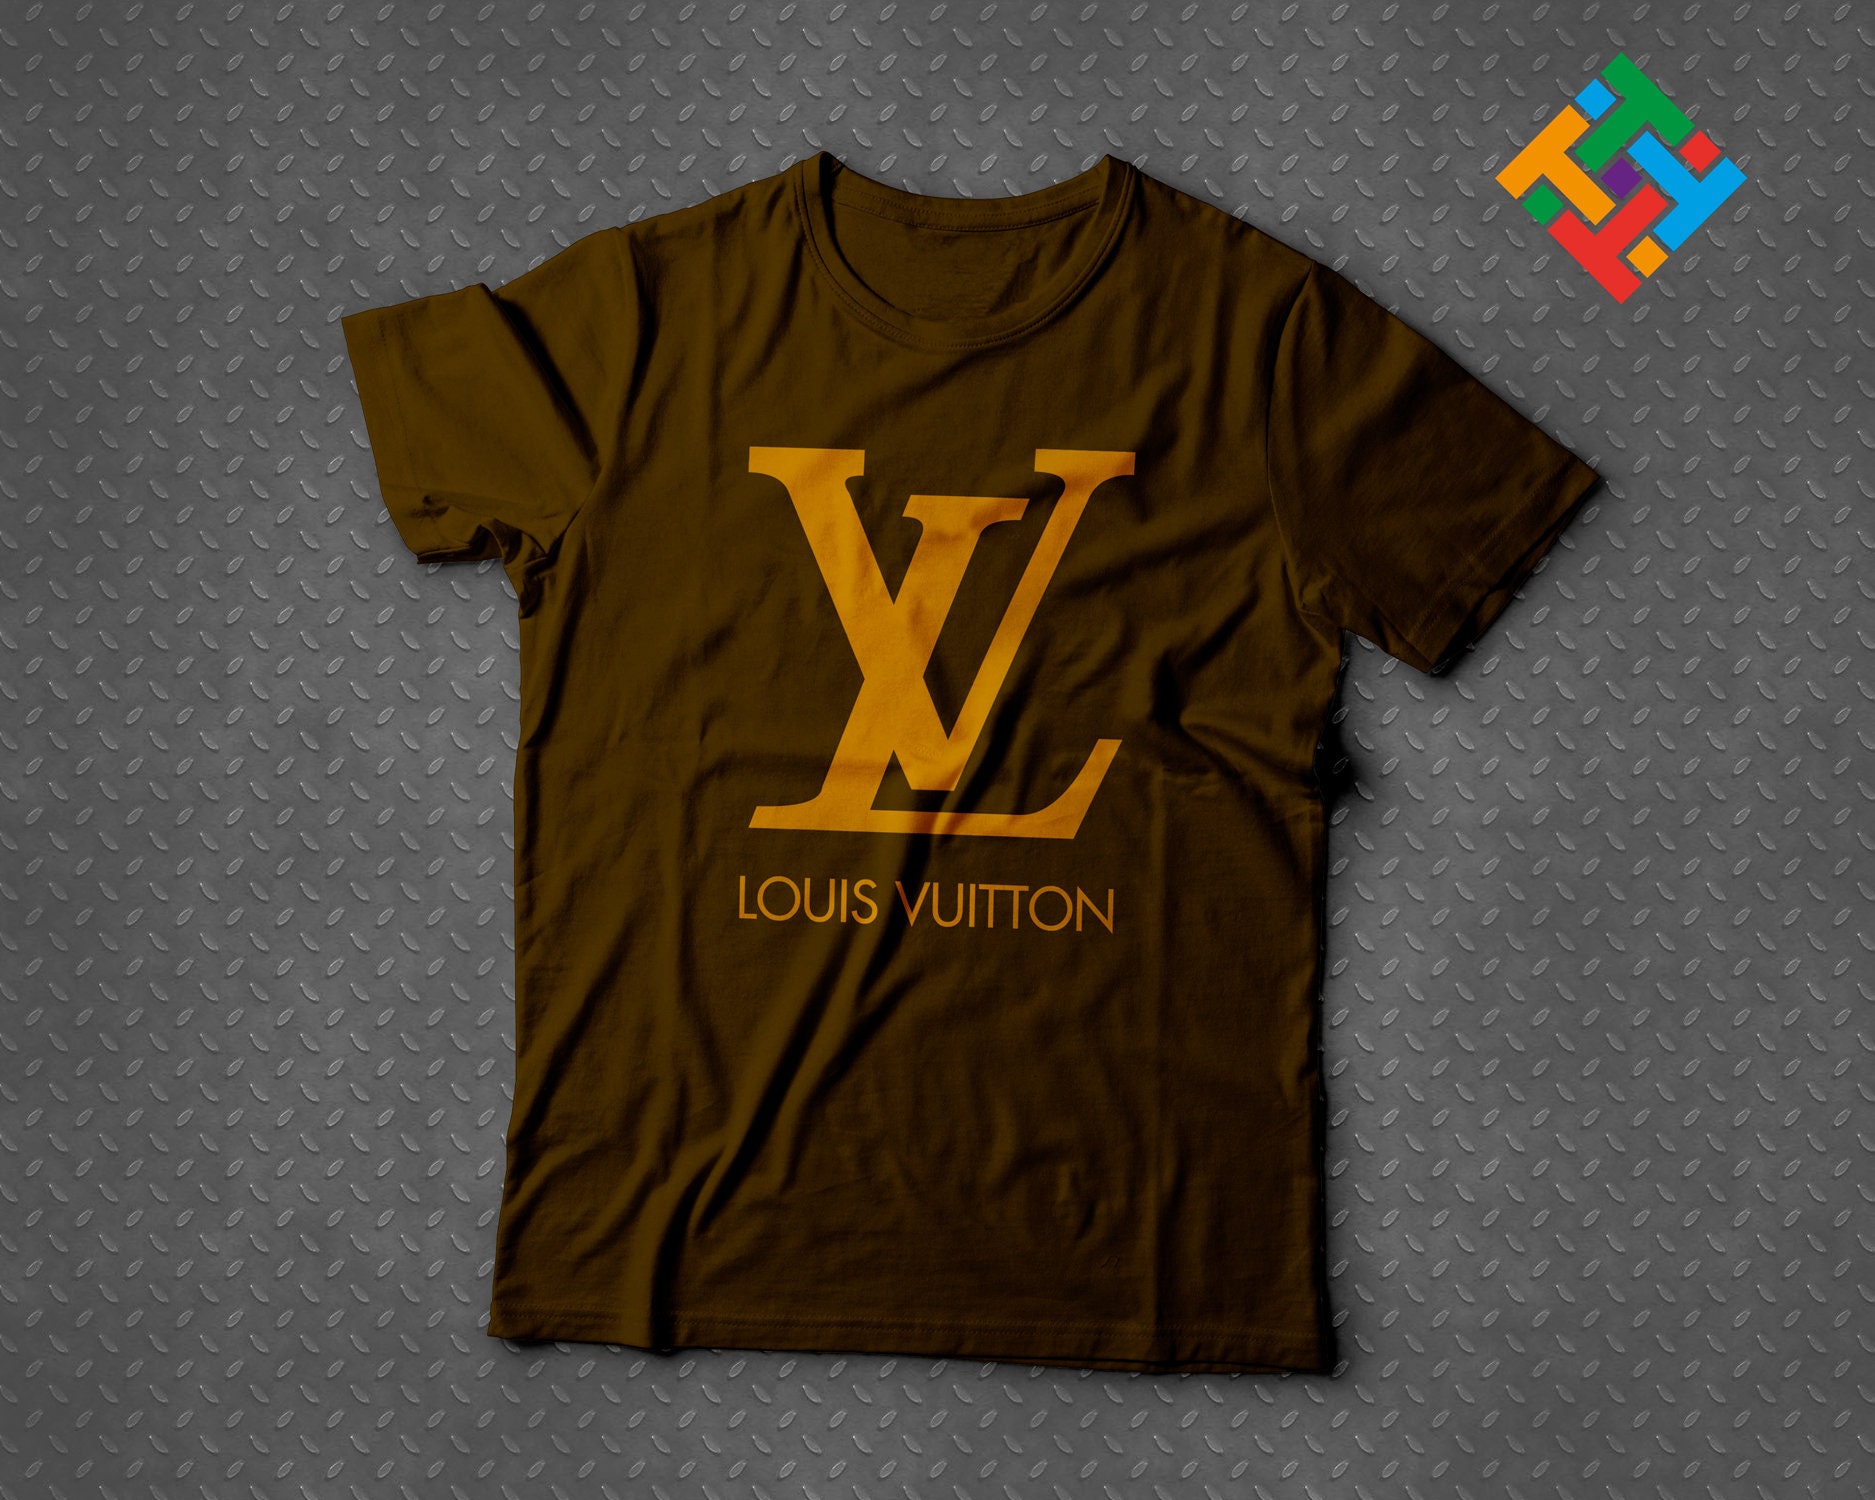 LOUIS VUITTON T-shirt mens womens replica | Etsy